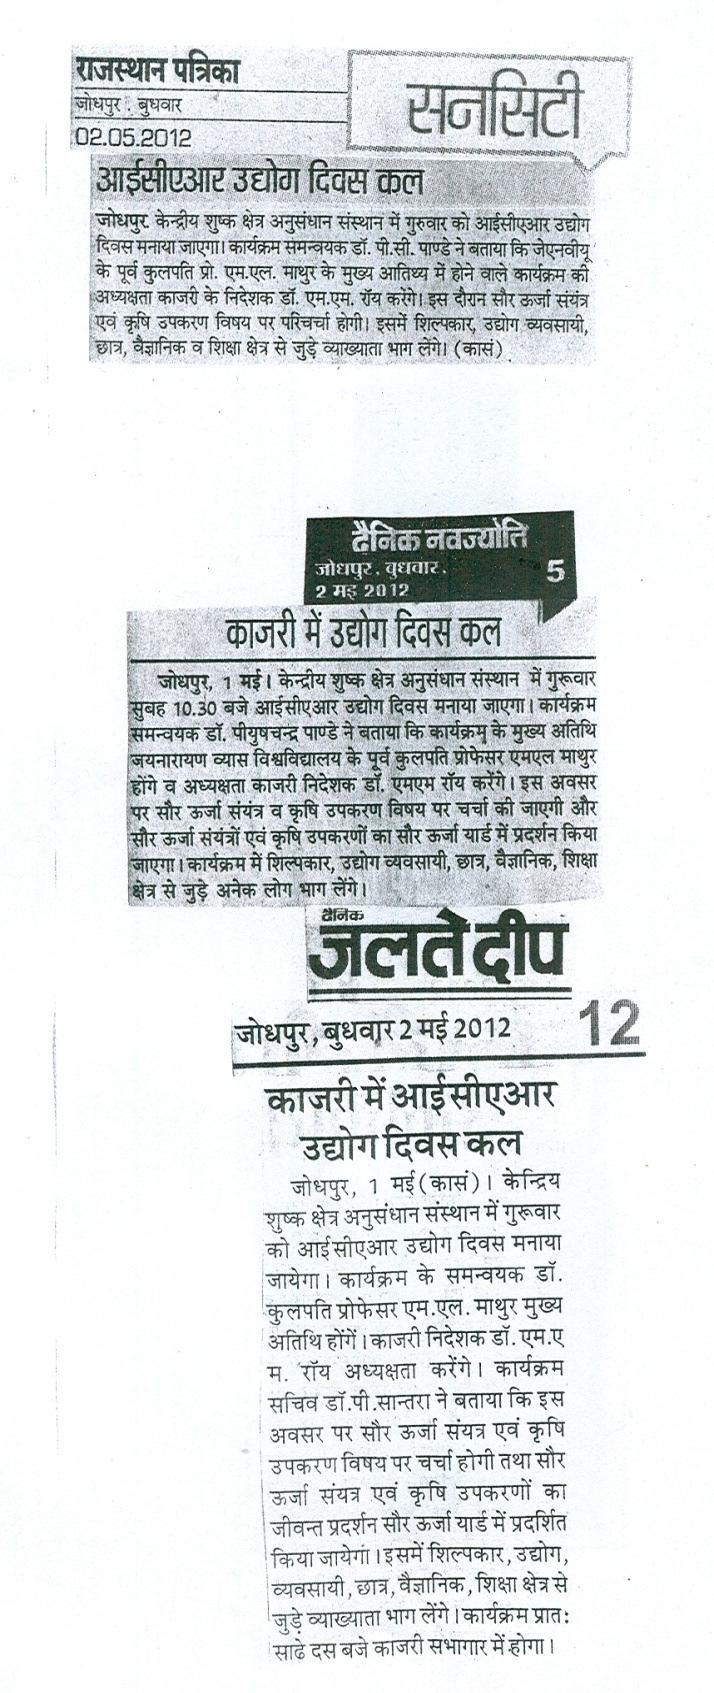 04-05-2012 Rajasthan Patrika dated